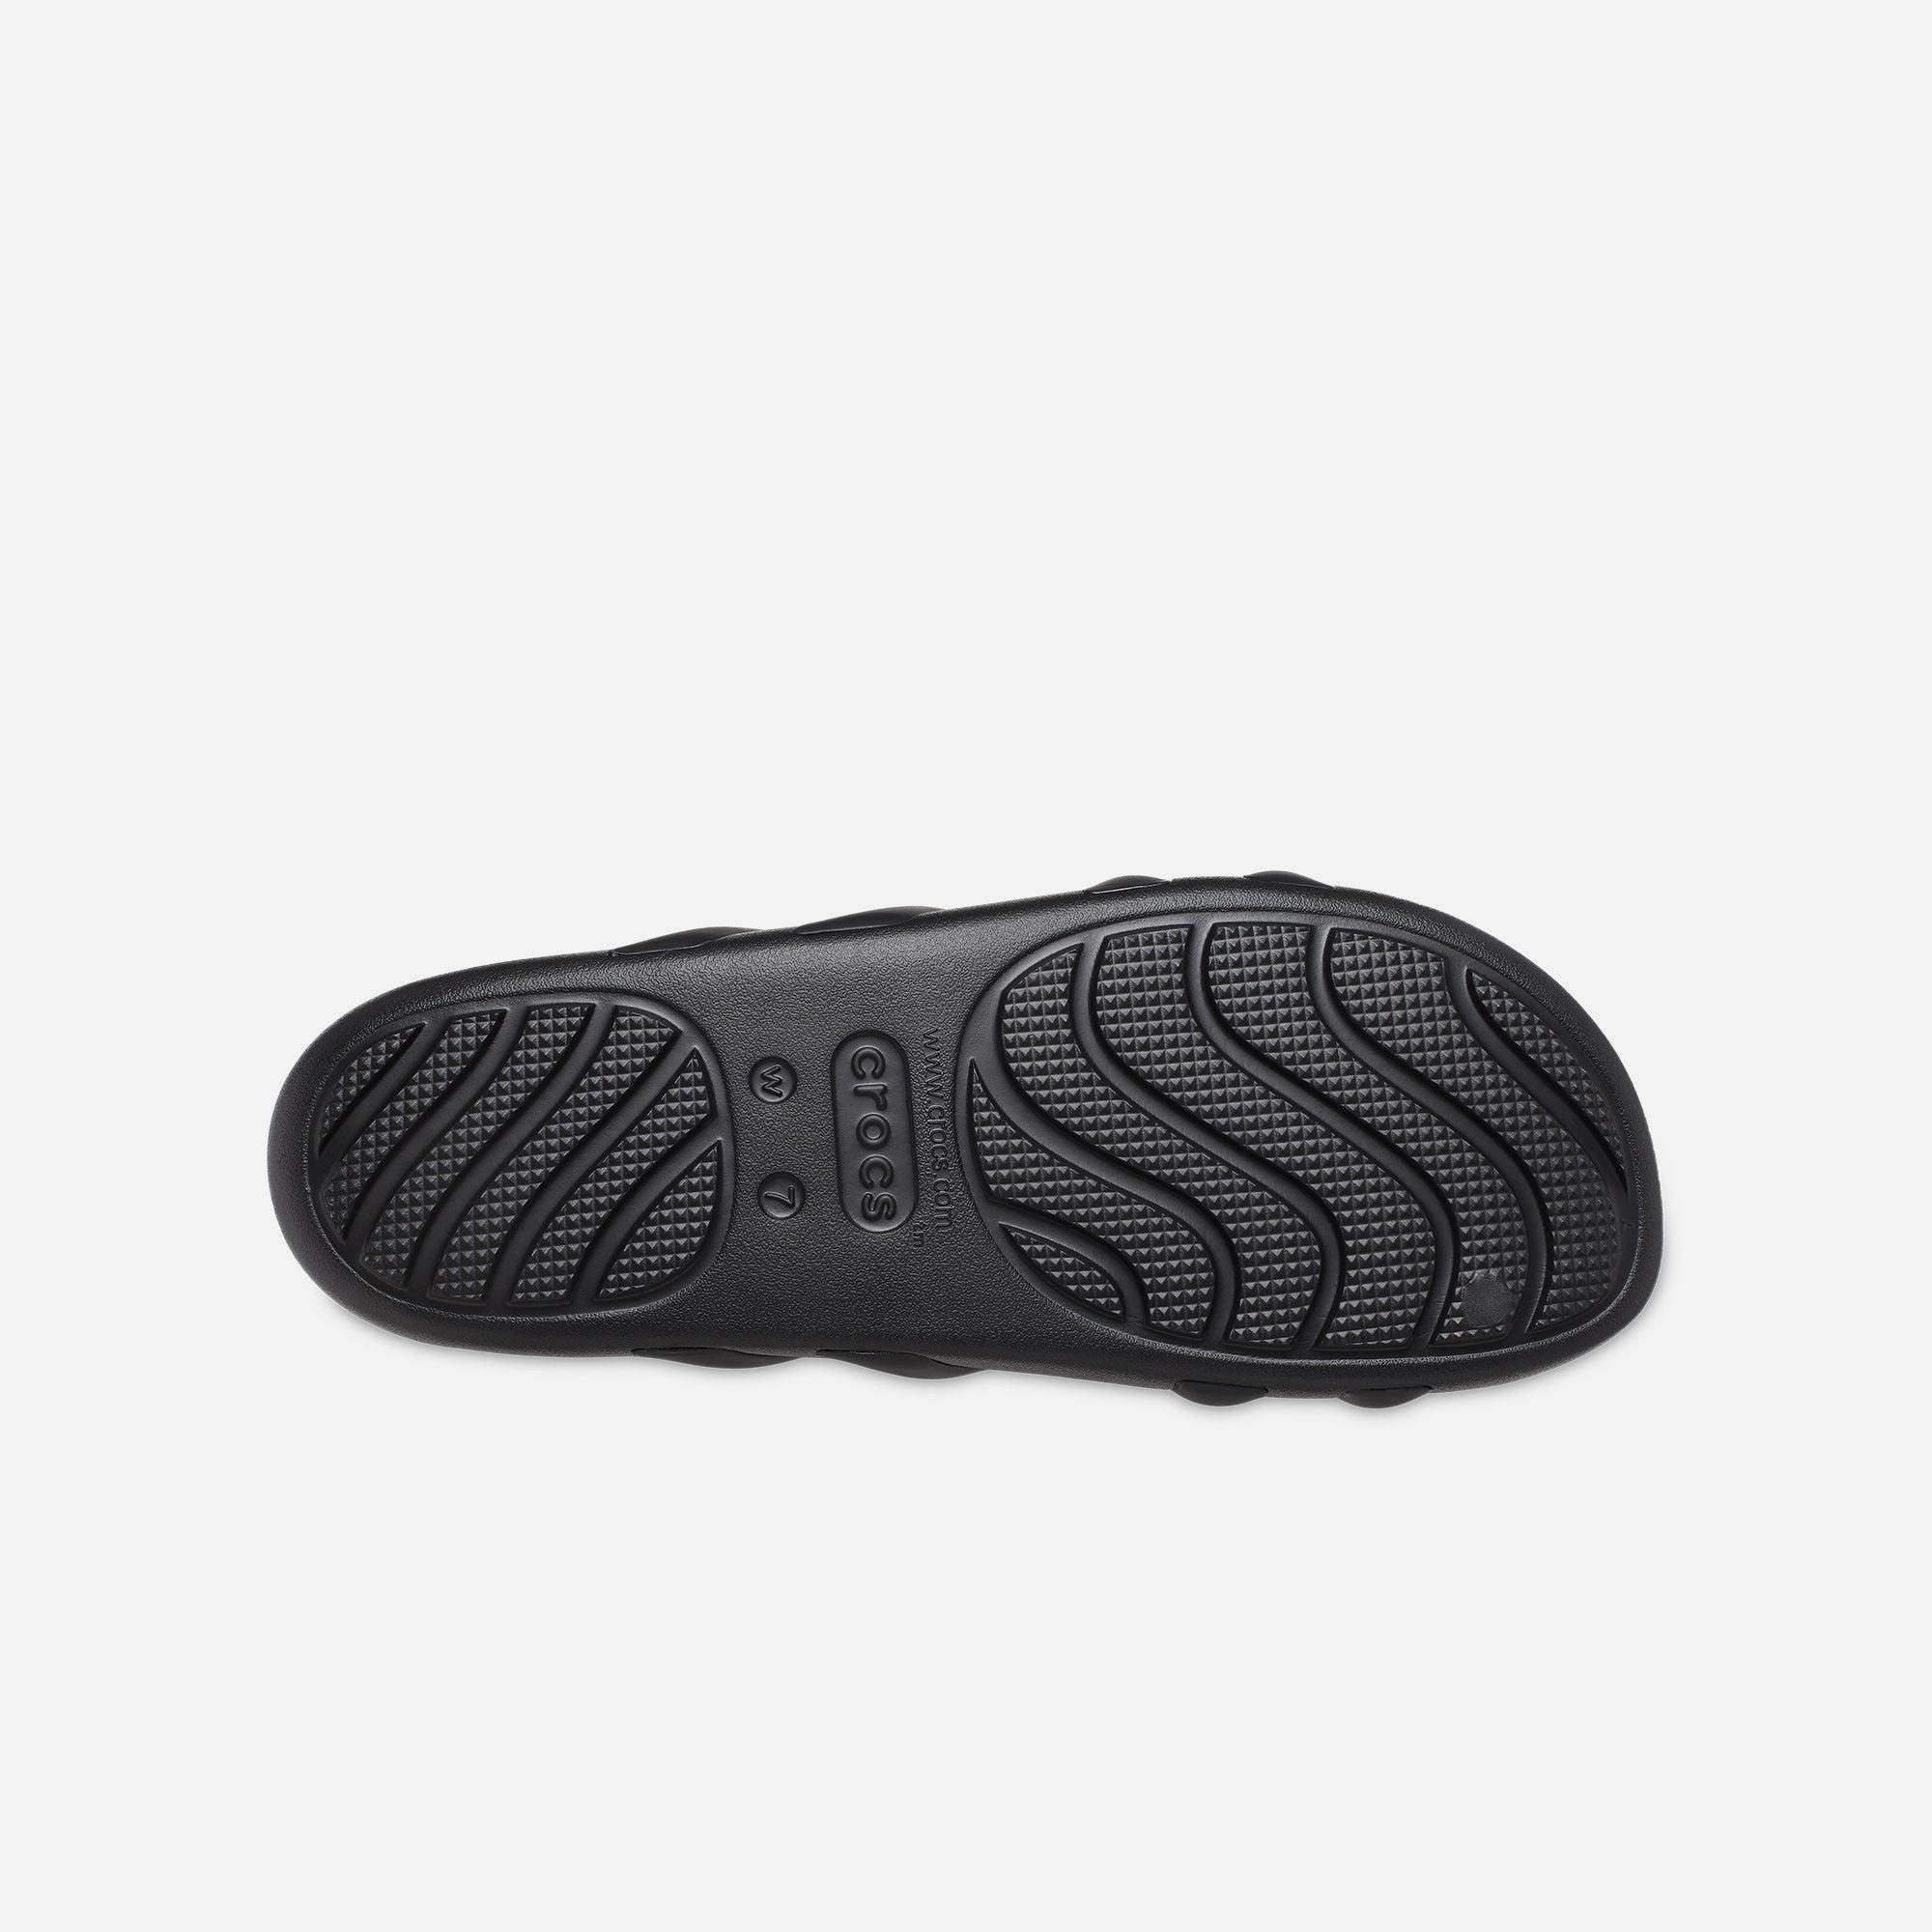 Giày sandal nữ Crocs Splash Strappy - 208217-001